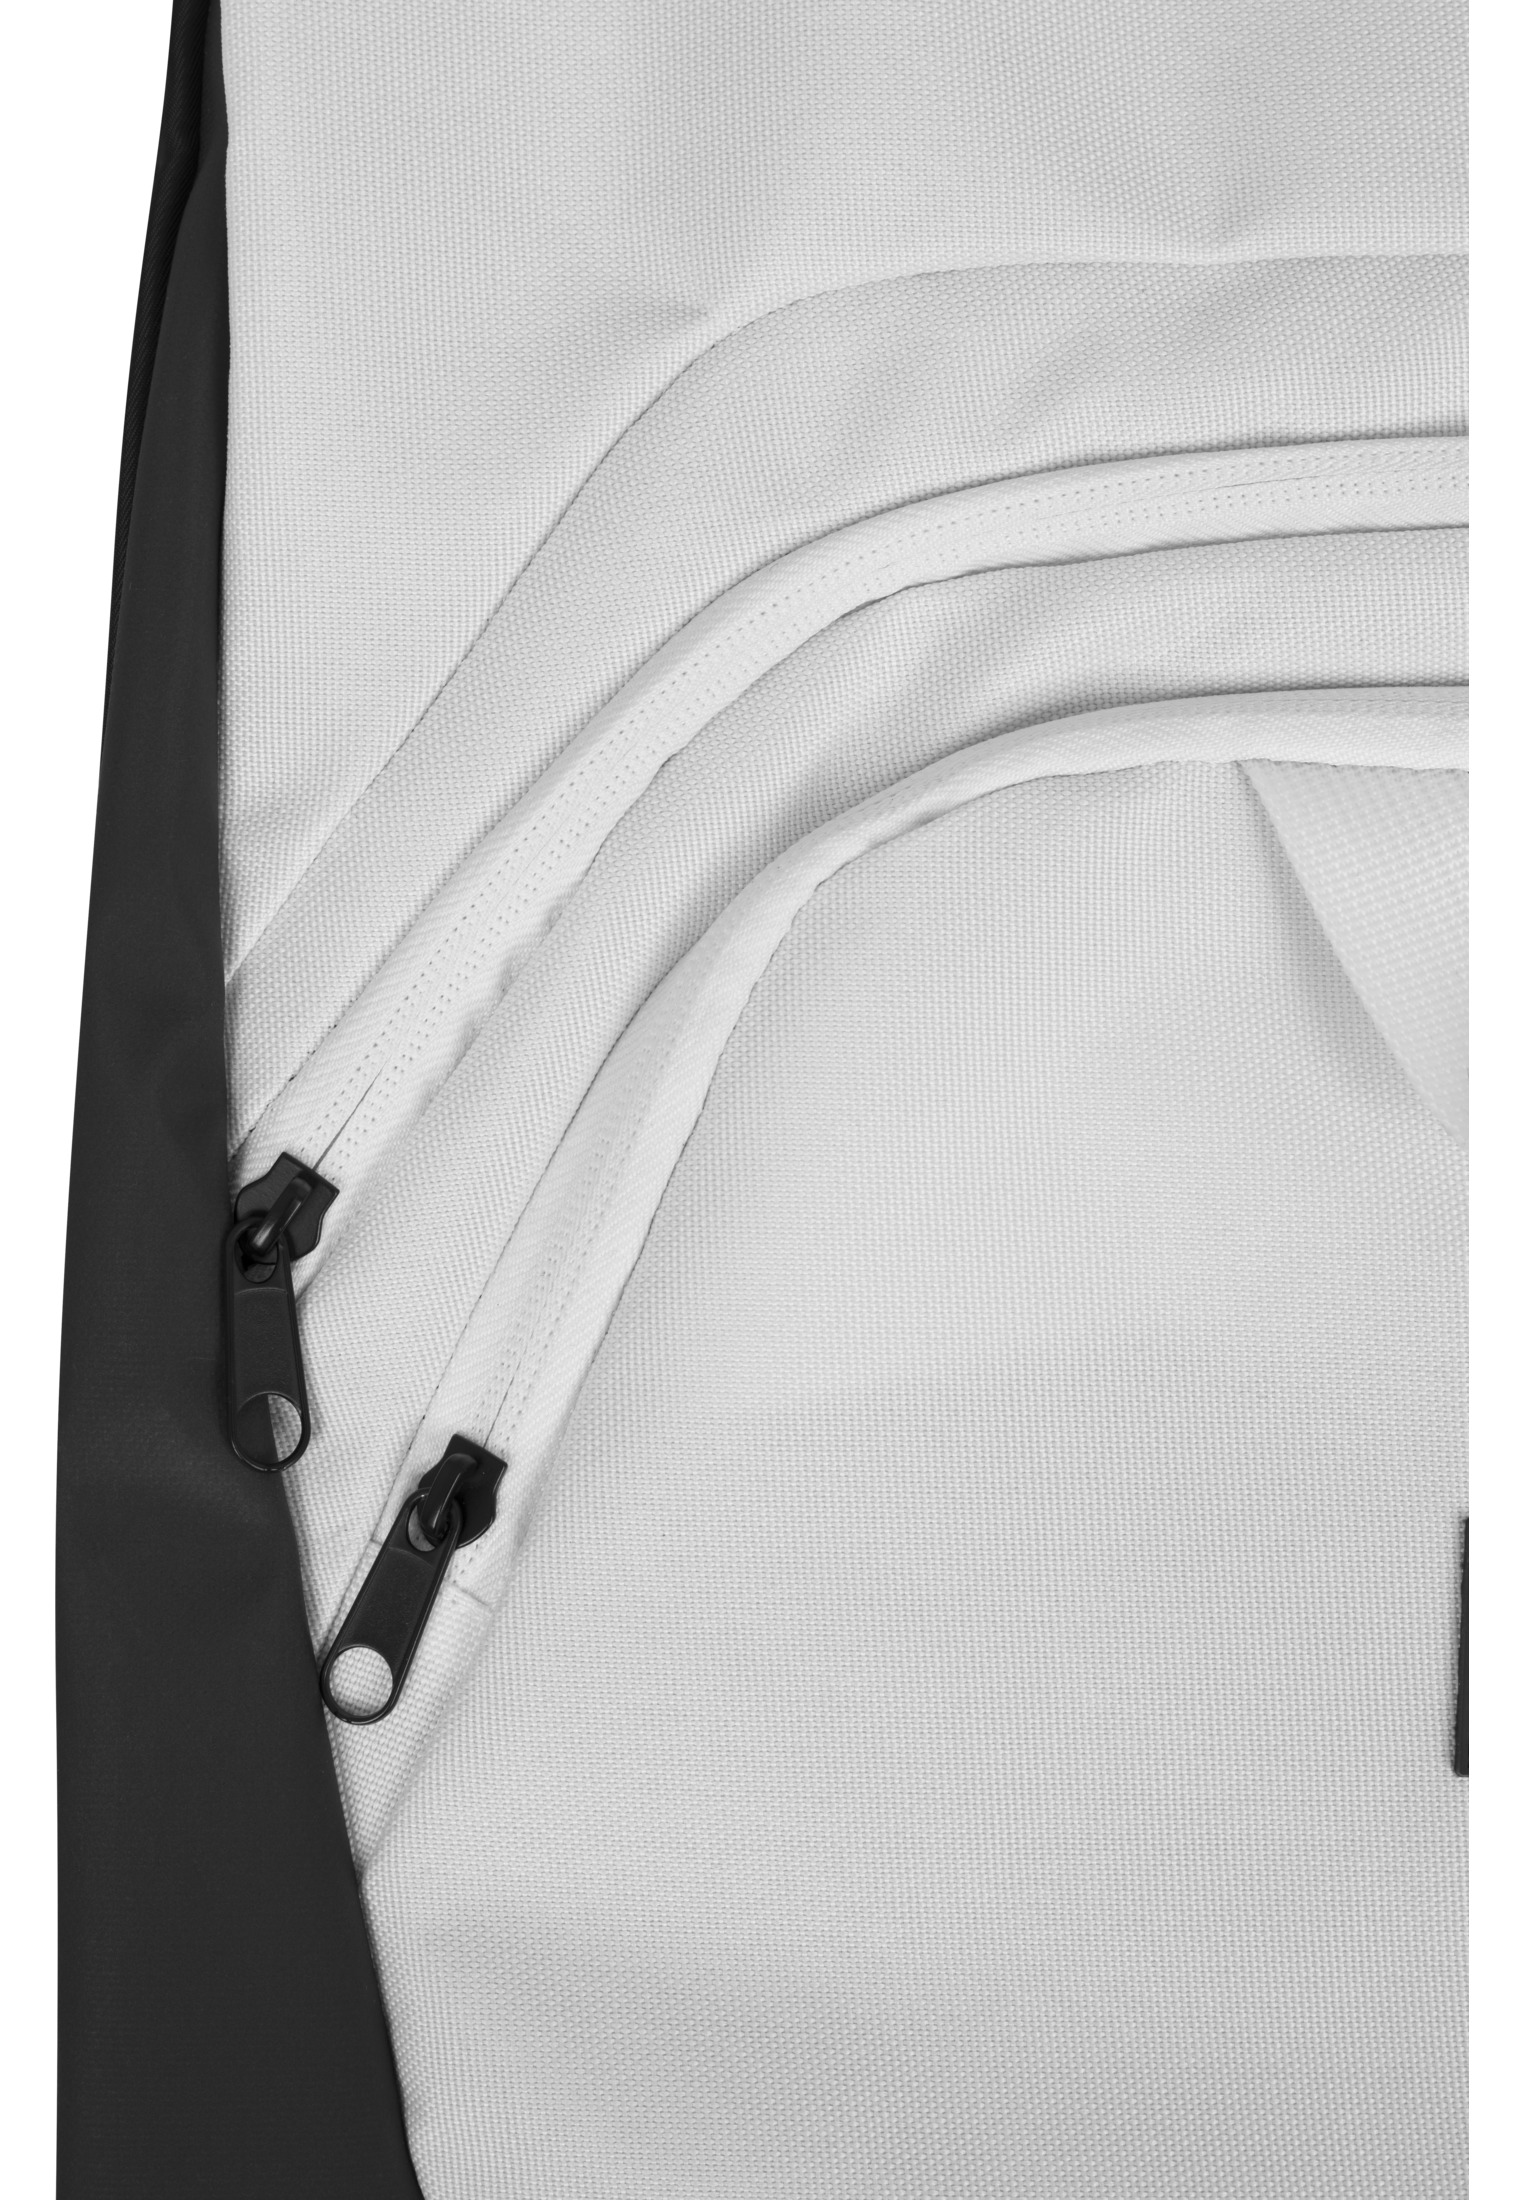 Taschen Ball Gym Bag in Farbe black/white/white